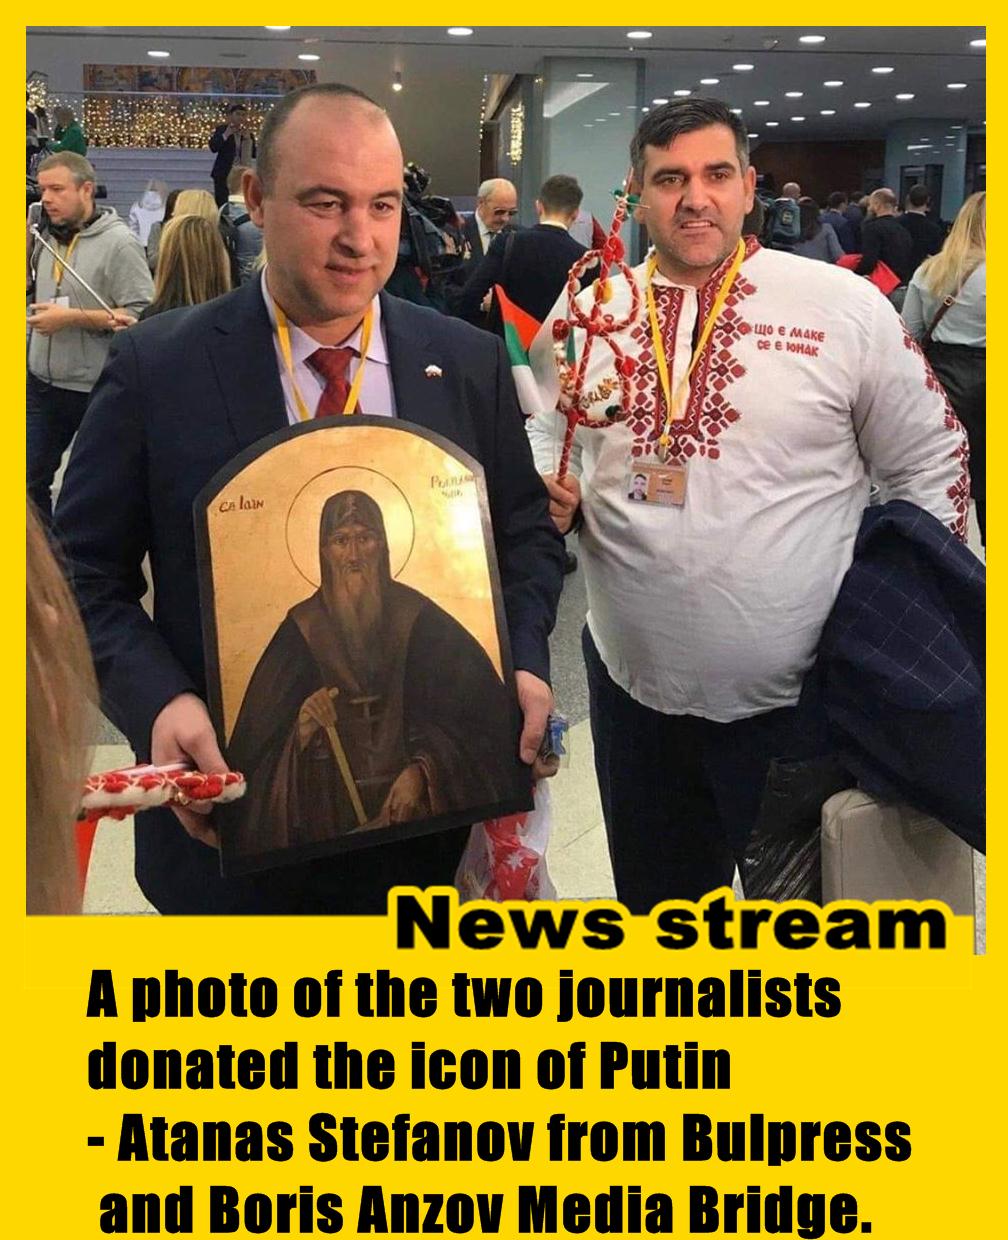 A photo of the two journalists donated the icon of Putin - Atanas Stefanov from Bulpress and Boris Anzov Media Bridge.